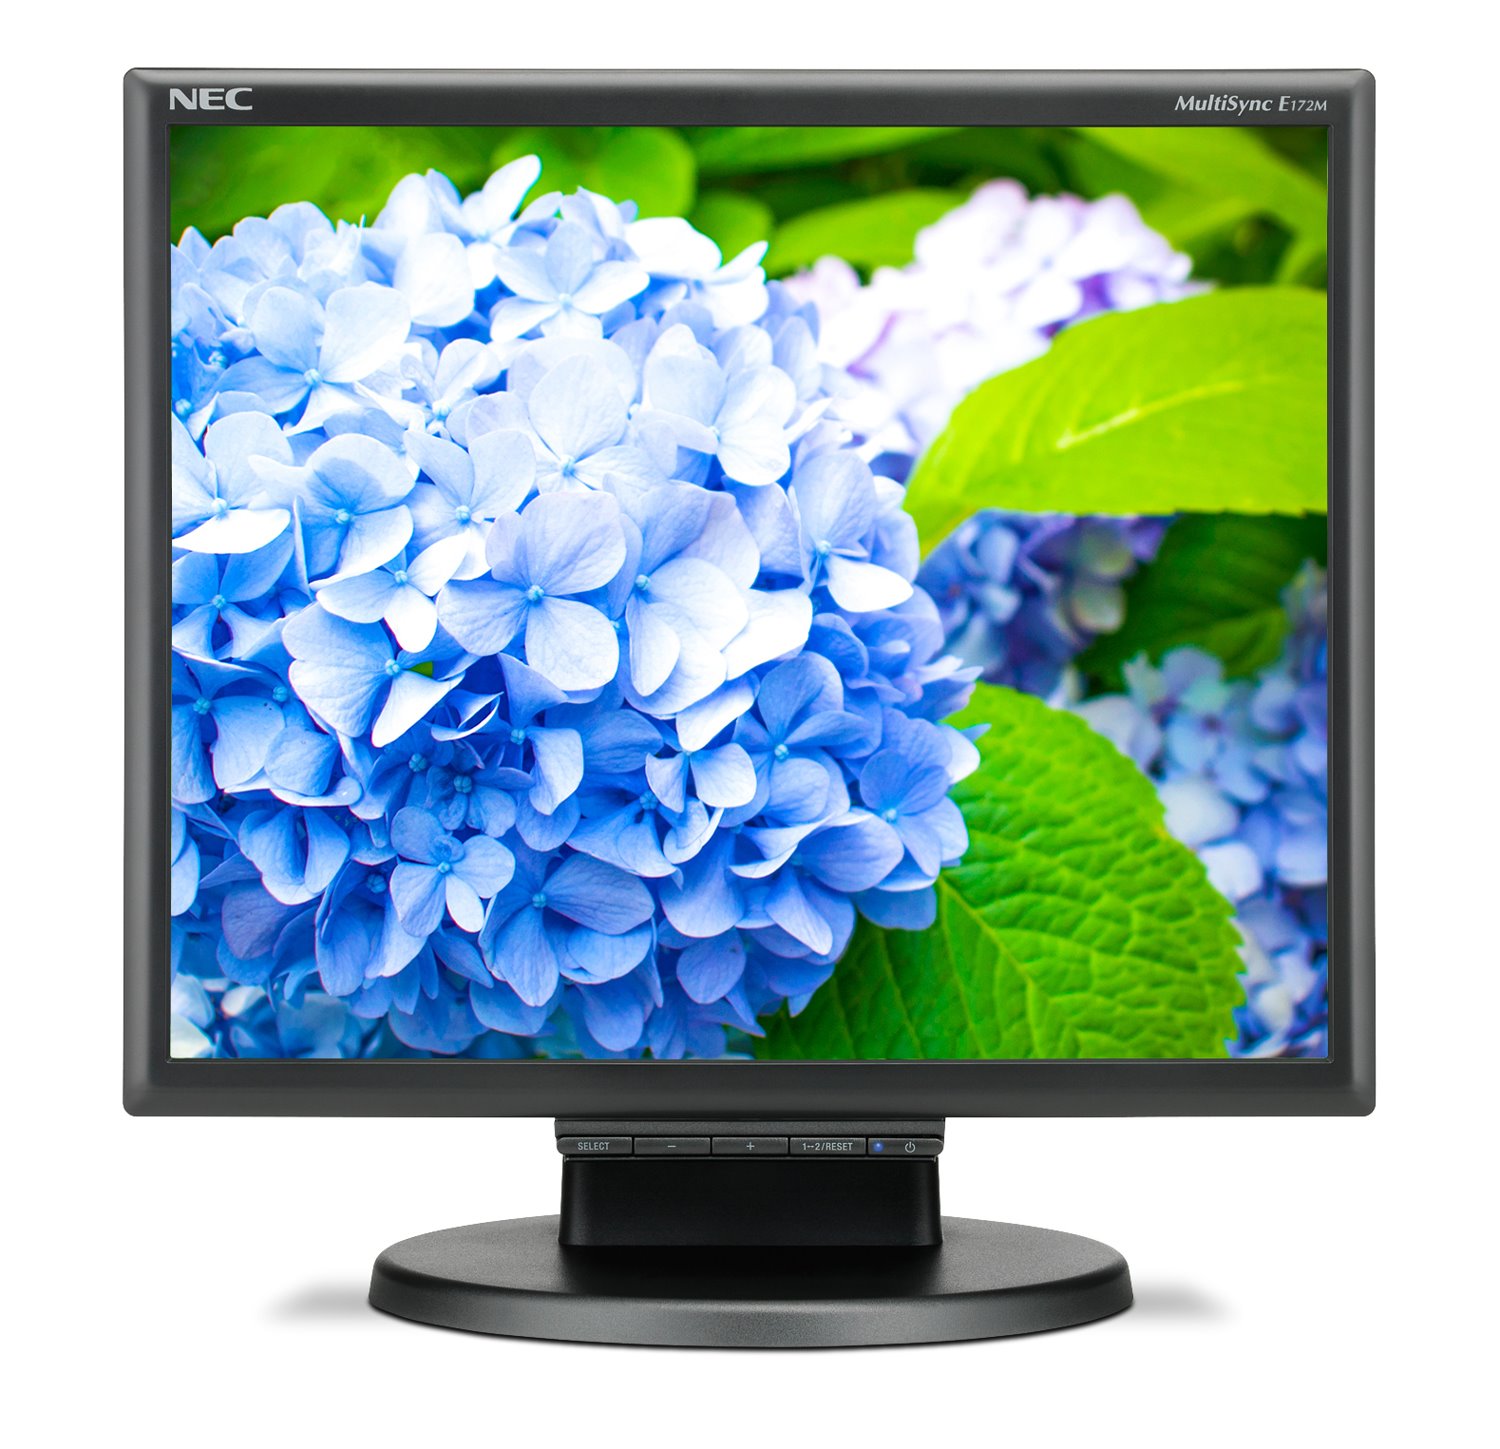 Nec 17 Desktop Monitor With Led Backlighting